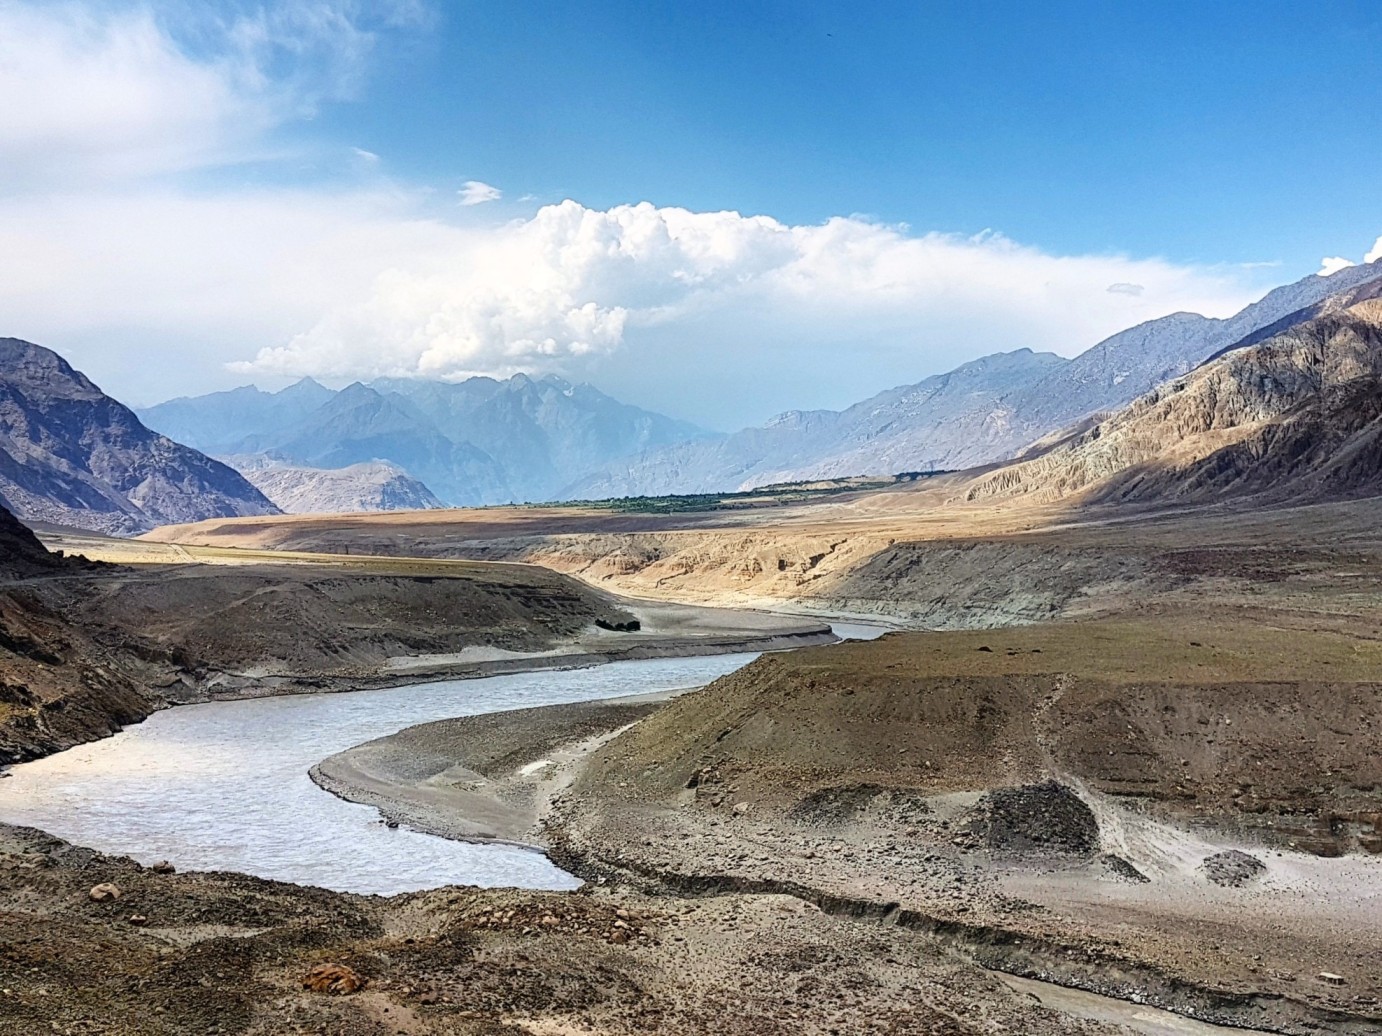  Indus_River_near_Chilas_Gilgit-Baltistan1